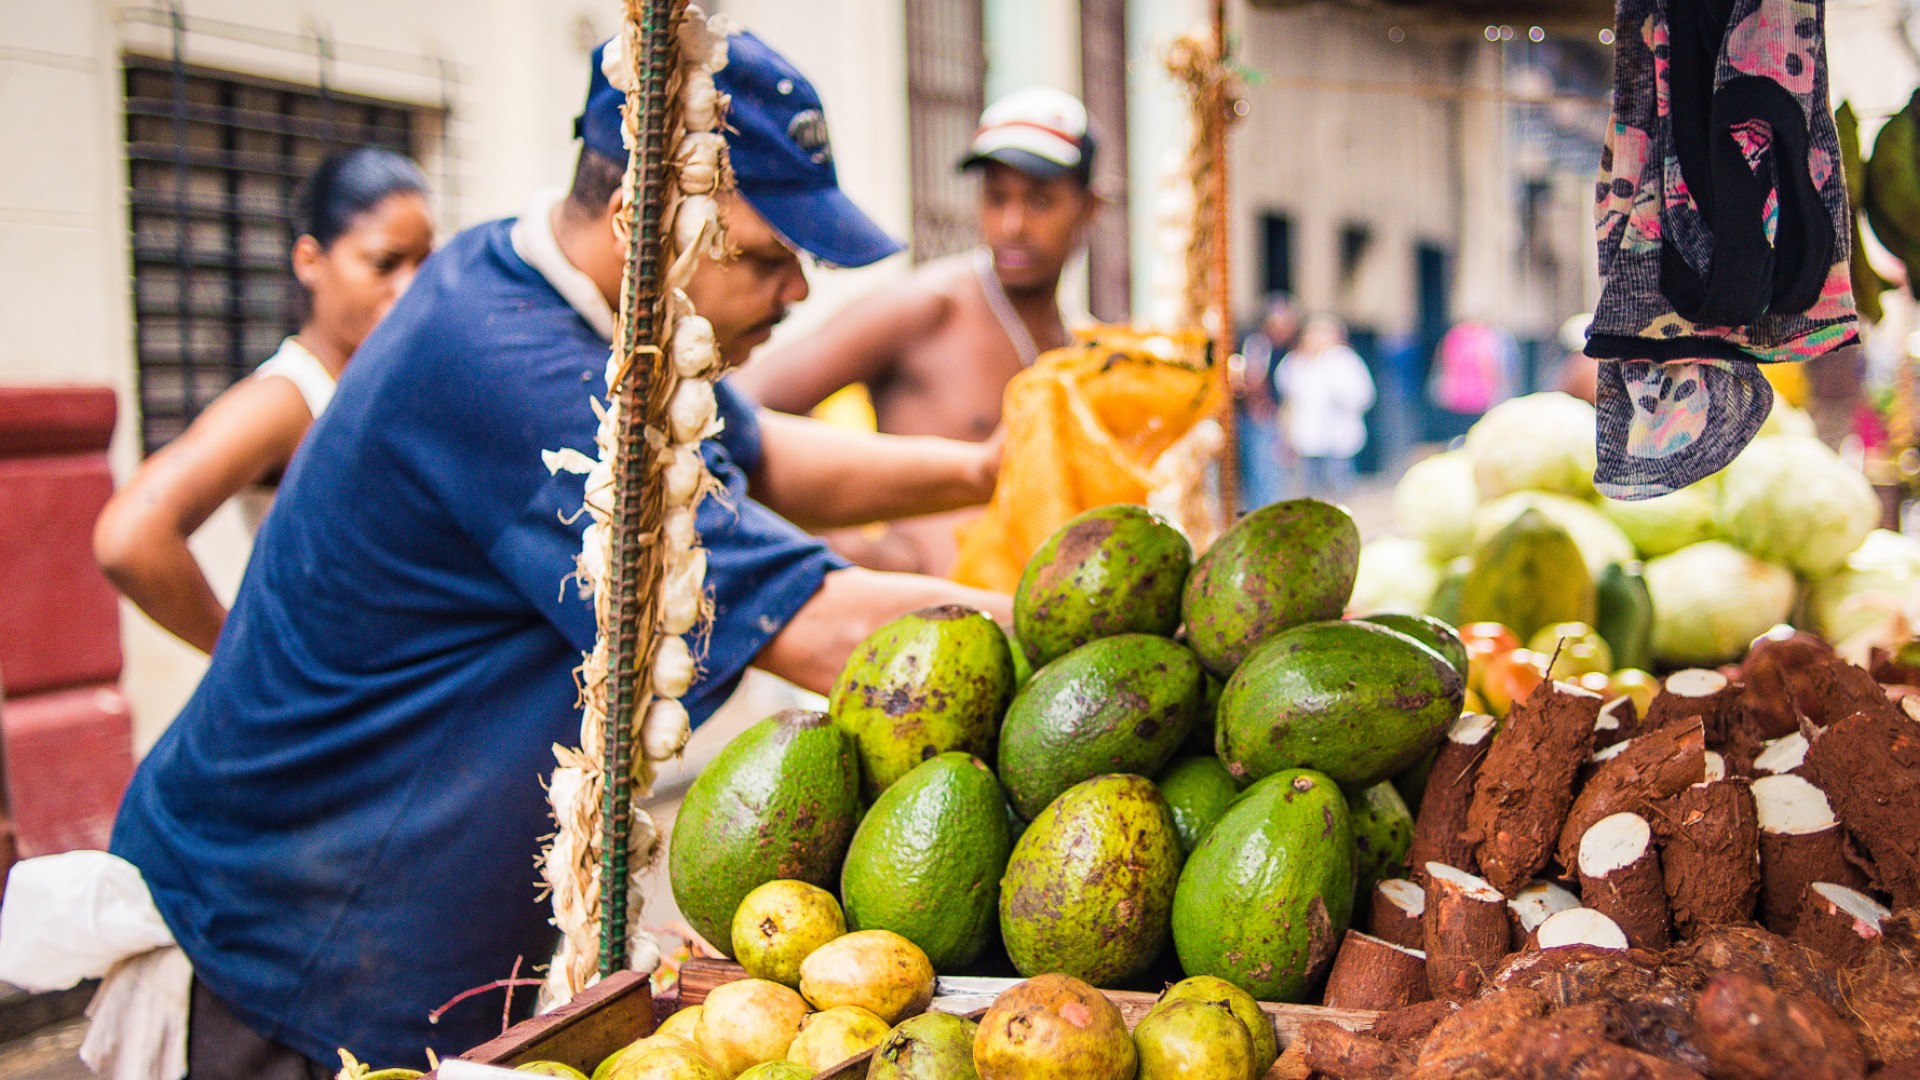 fruit stand in the streets of havana, cuba